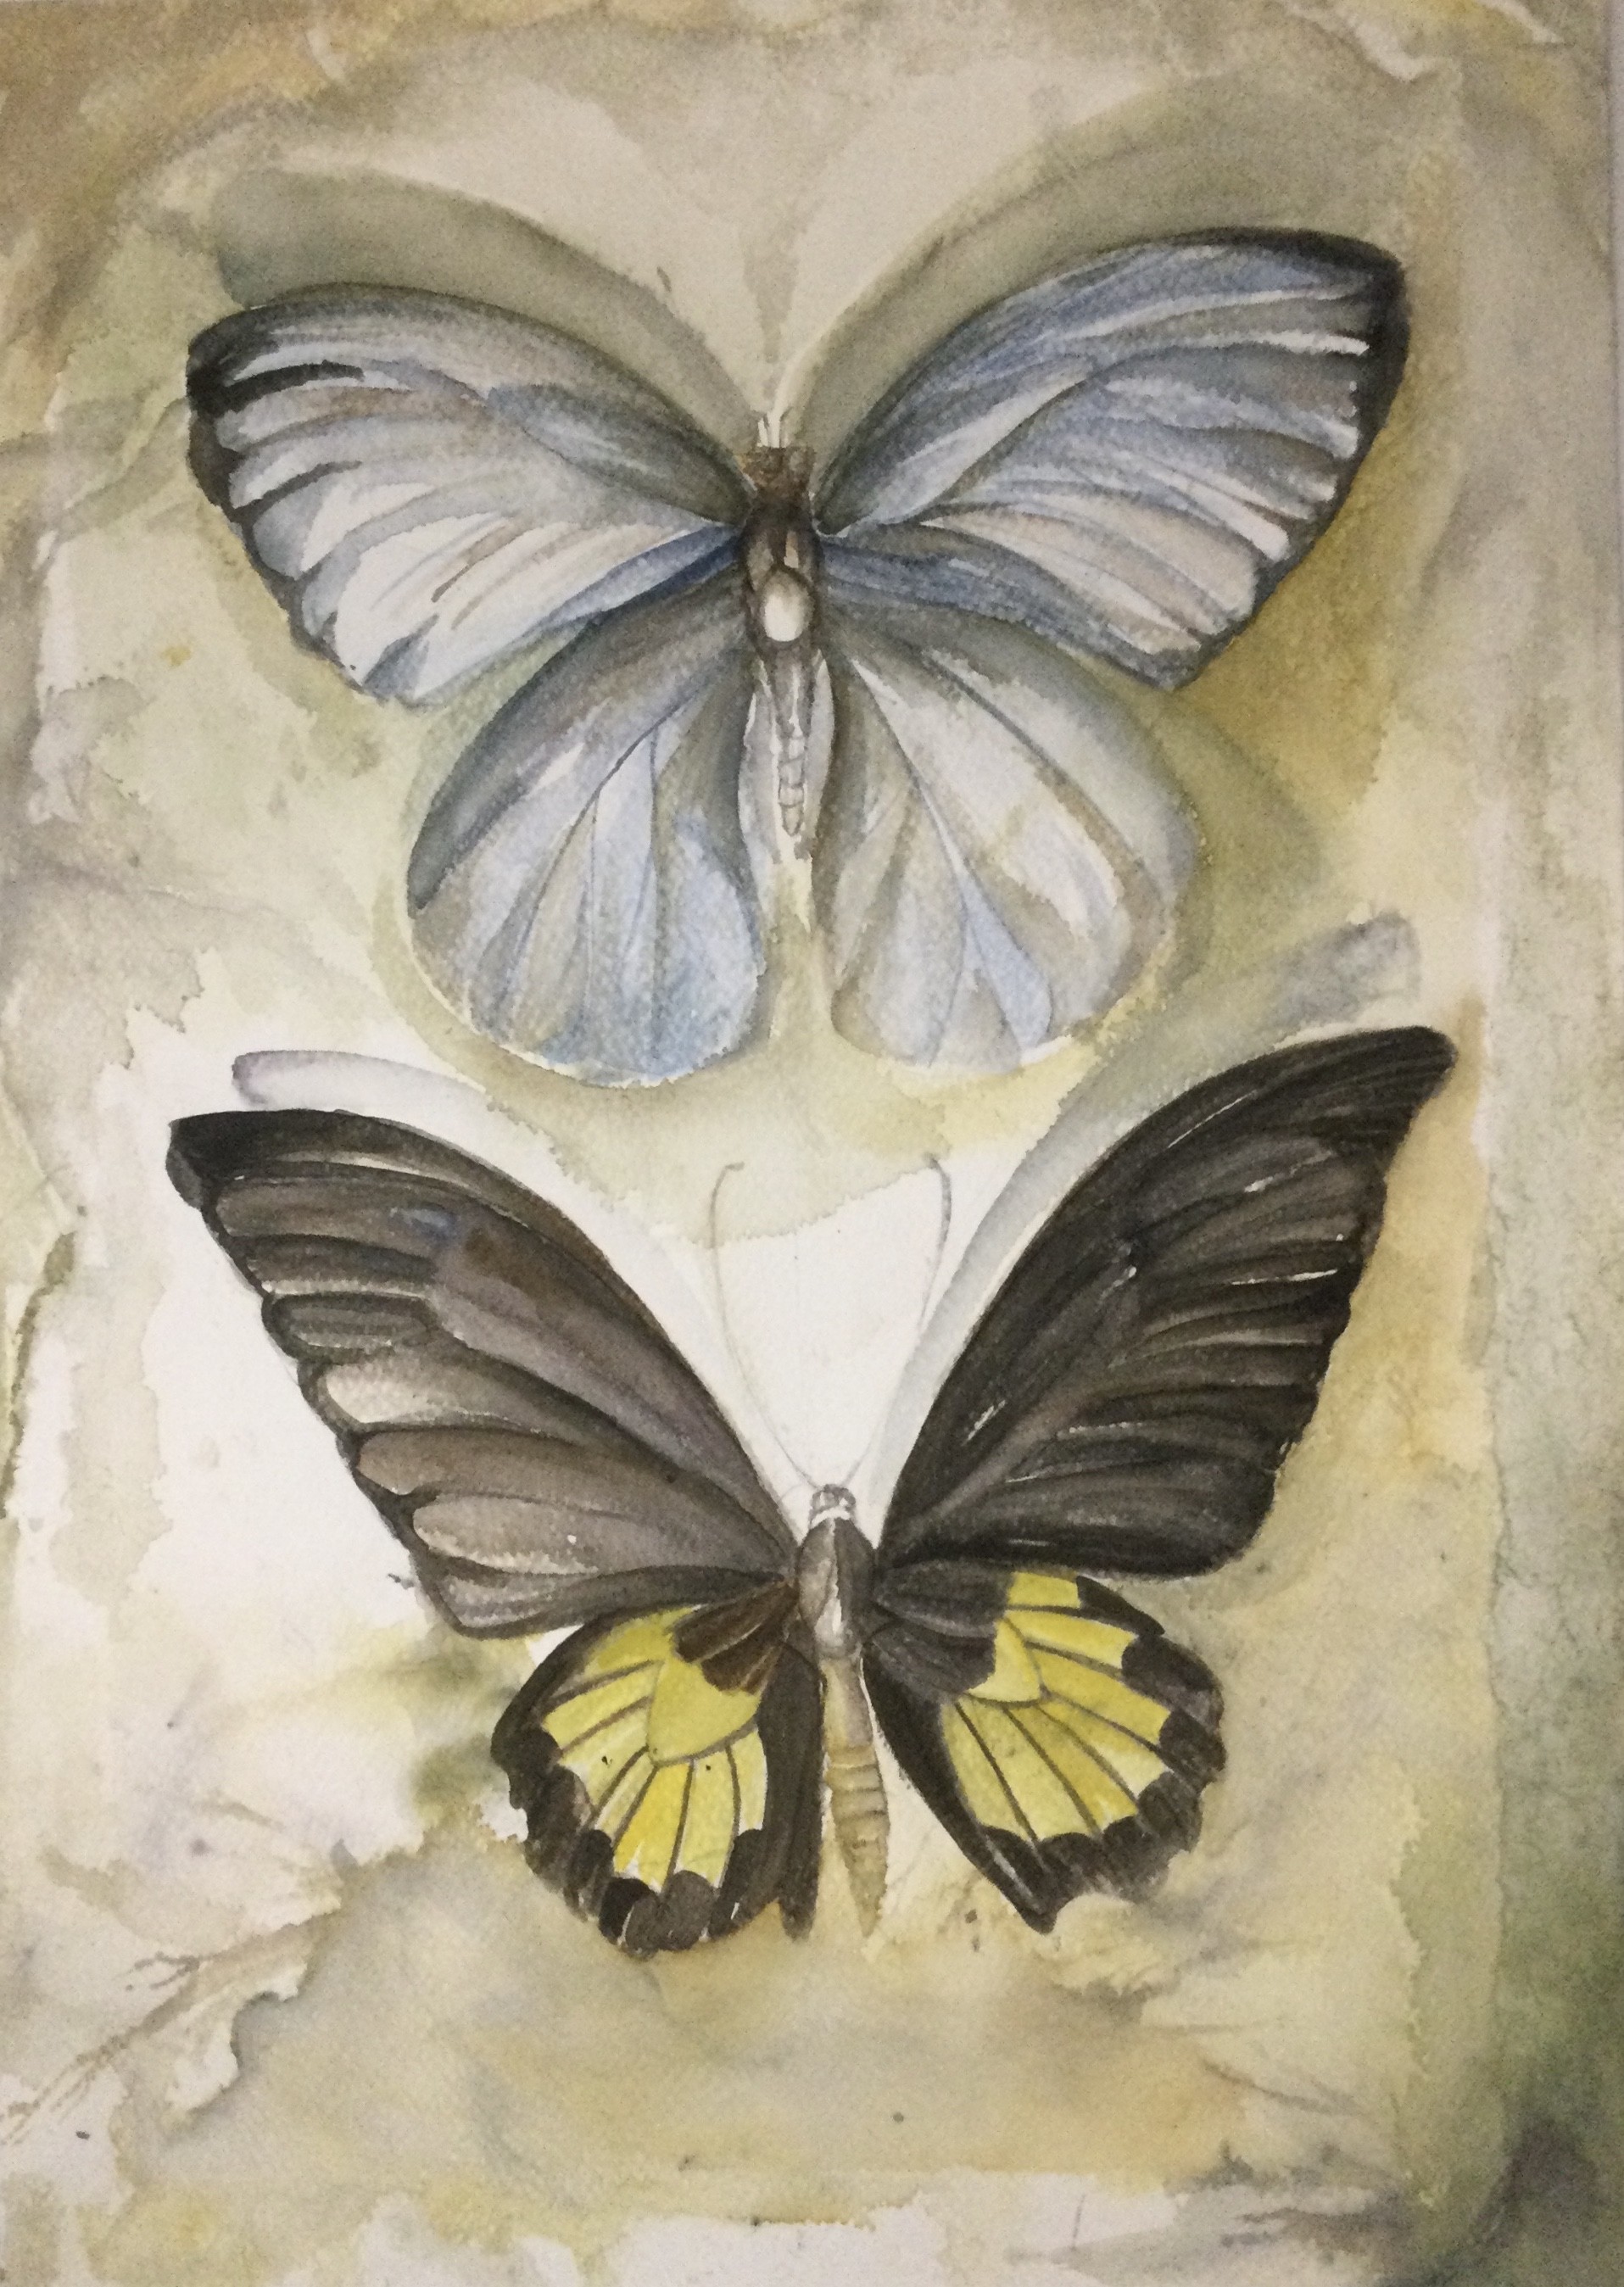 endemic butterflies if Sri Lanka by Dulika Silva